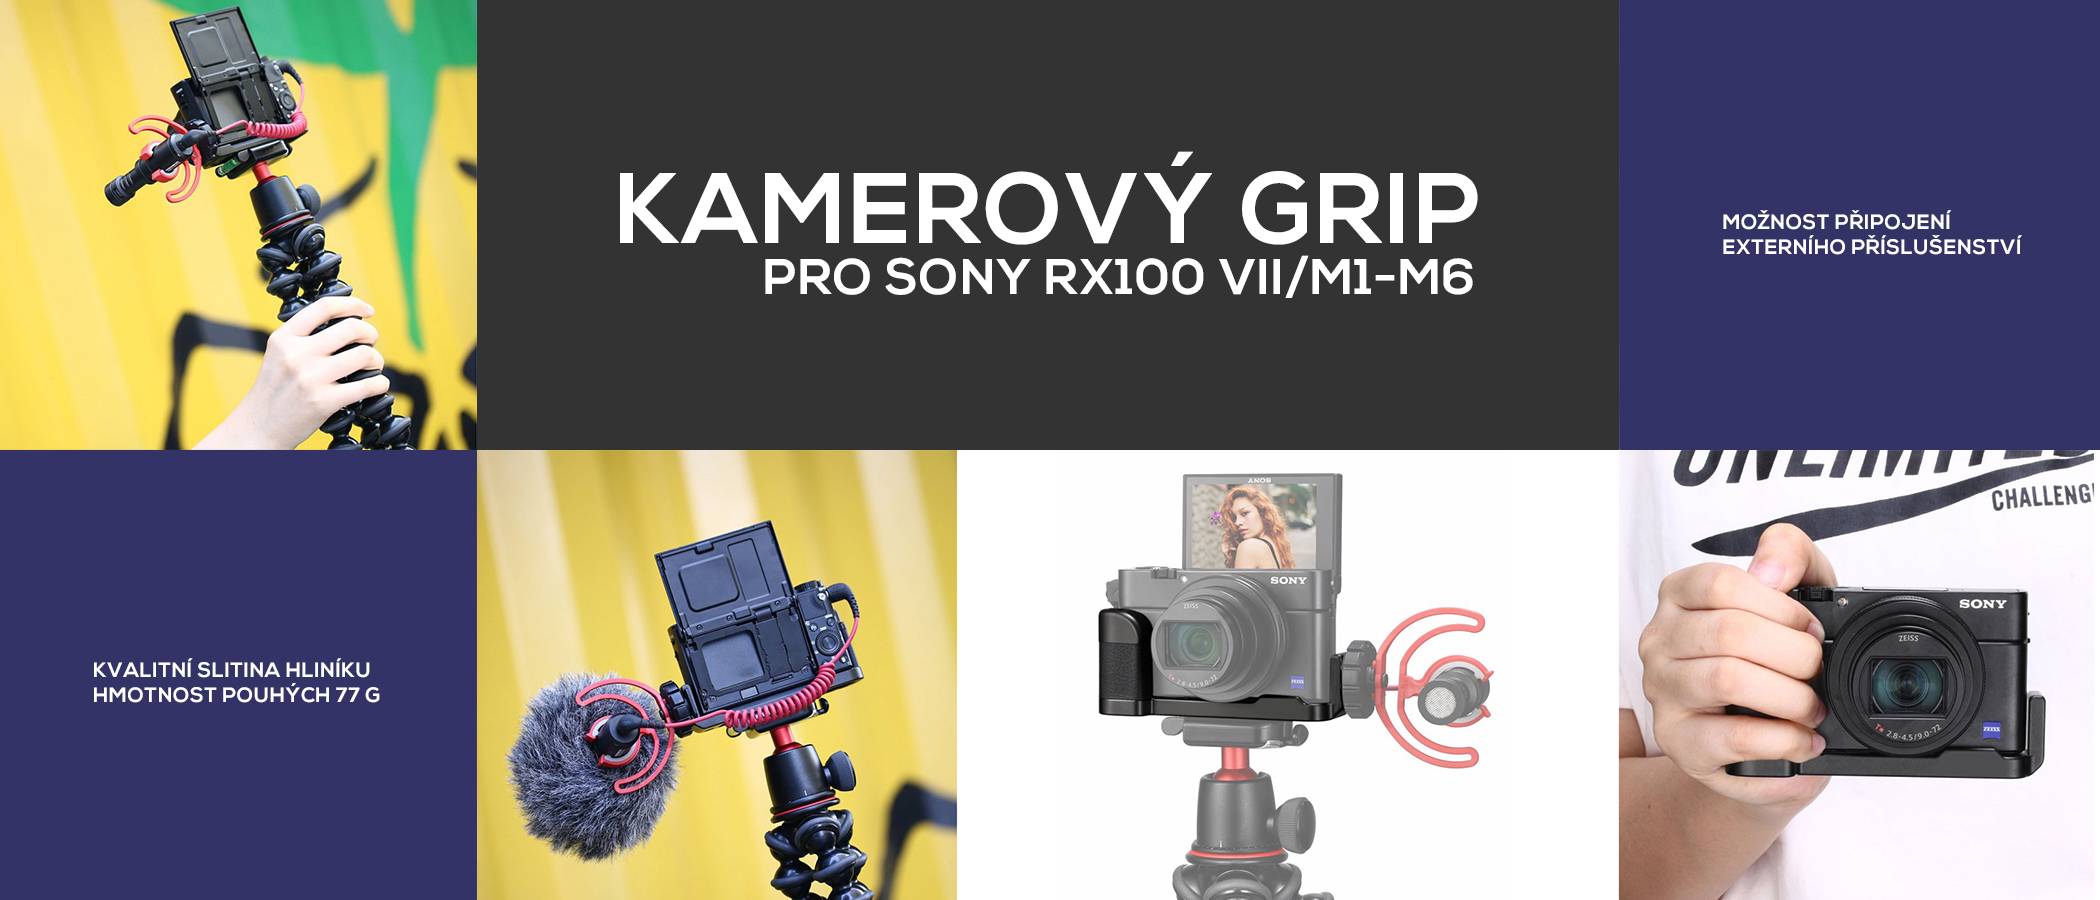 film-technika-kamerový-grip-pro-rx100-vii